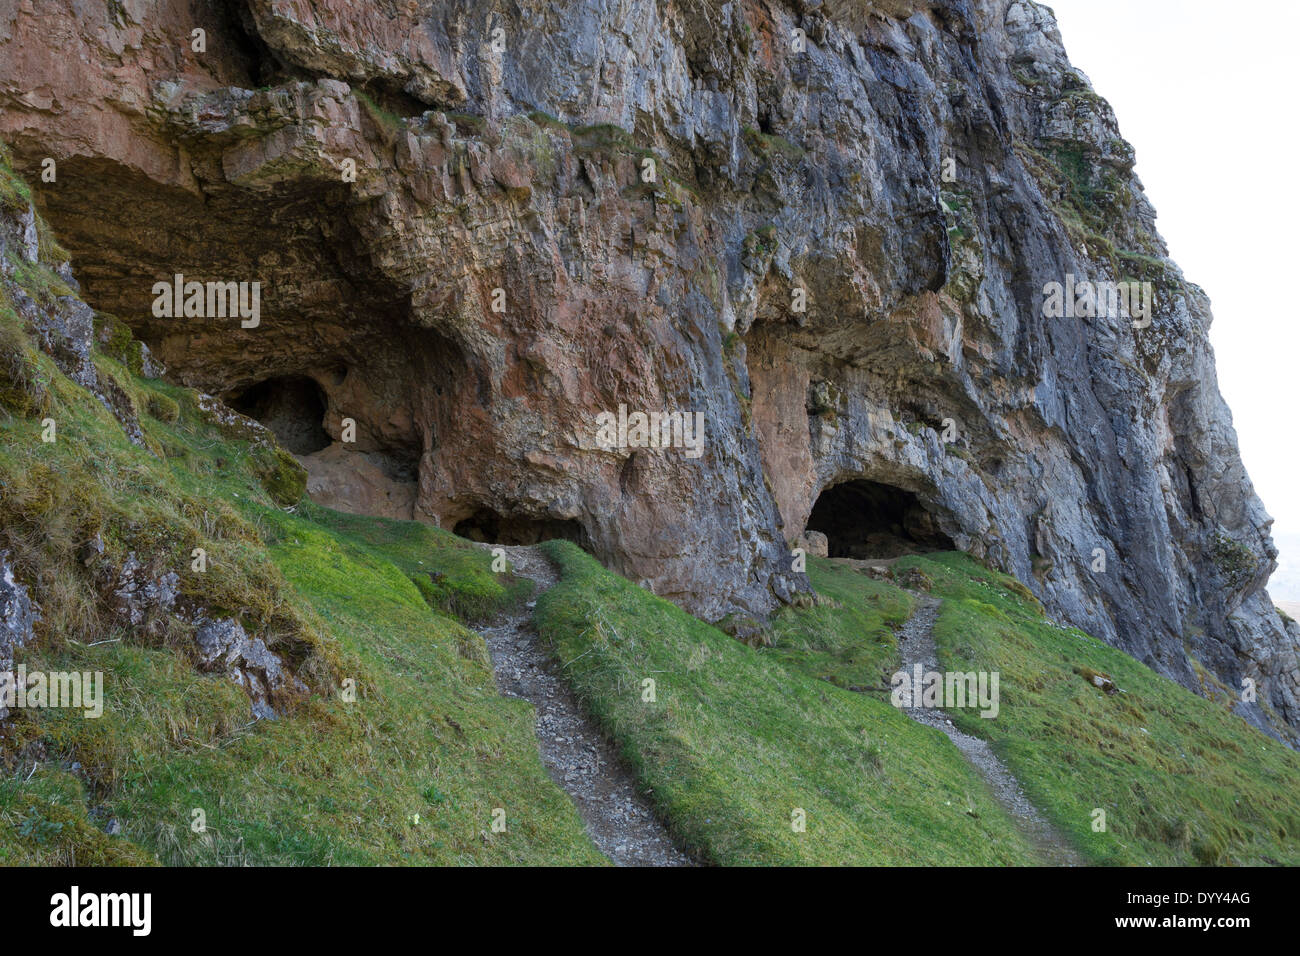 The Inchnadamph Bone Caves on the Lower slopes of Beinn an Fhuarain, Allt nan Uamh, Assynt, Sutherland Northern Scotland UK Stock Photo